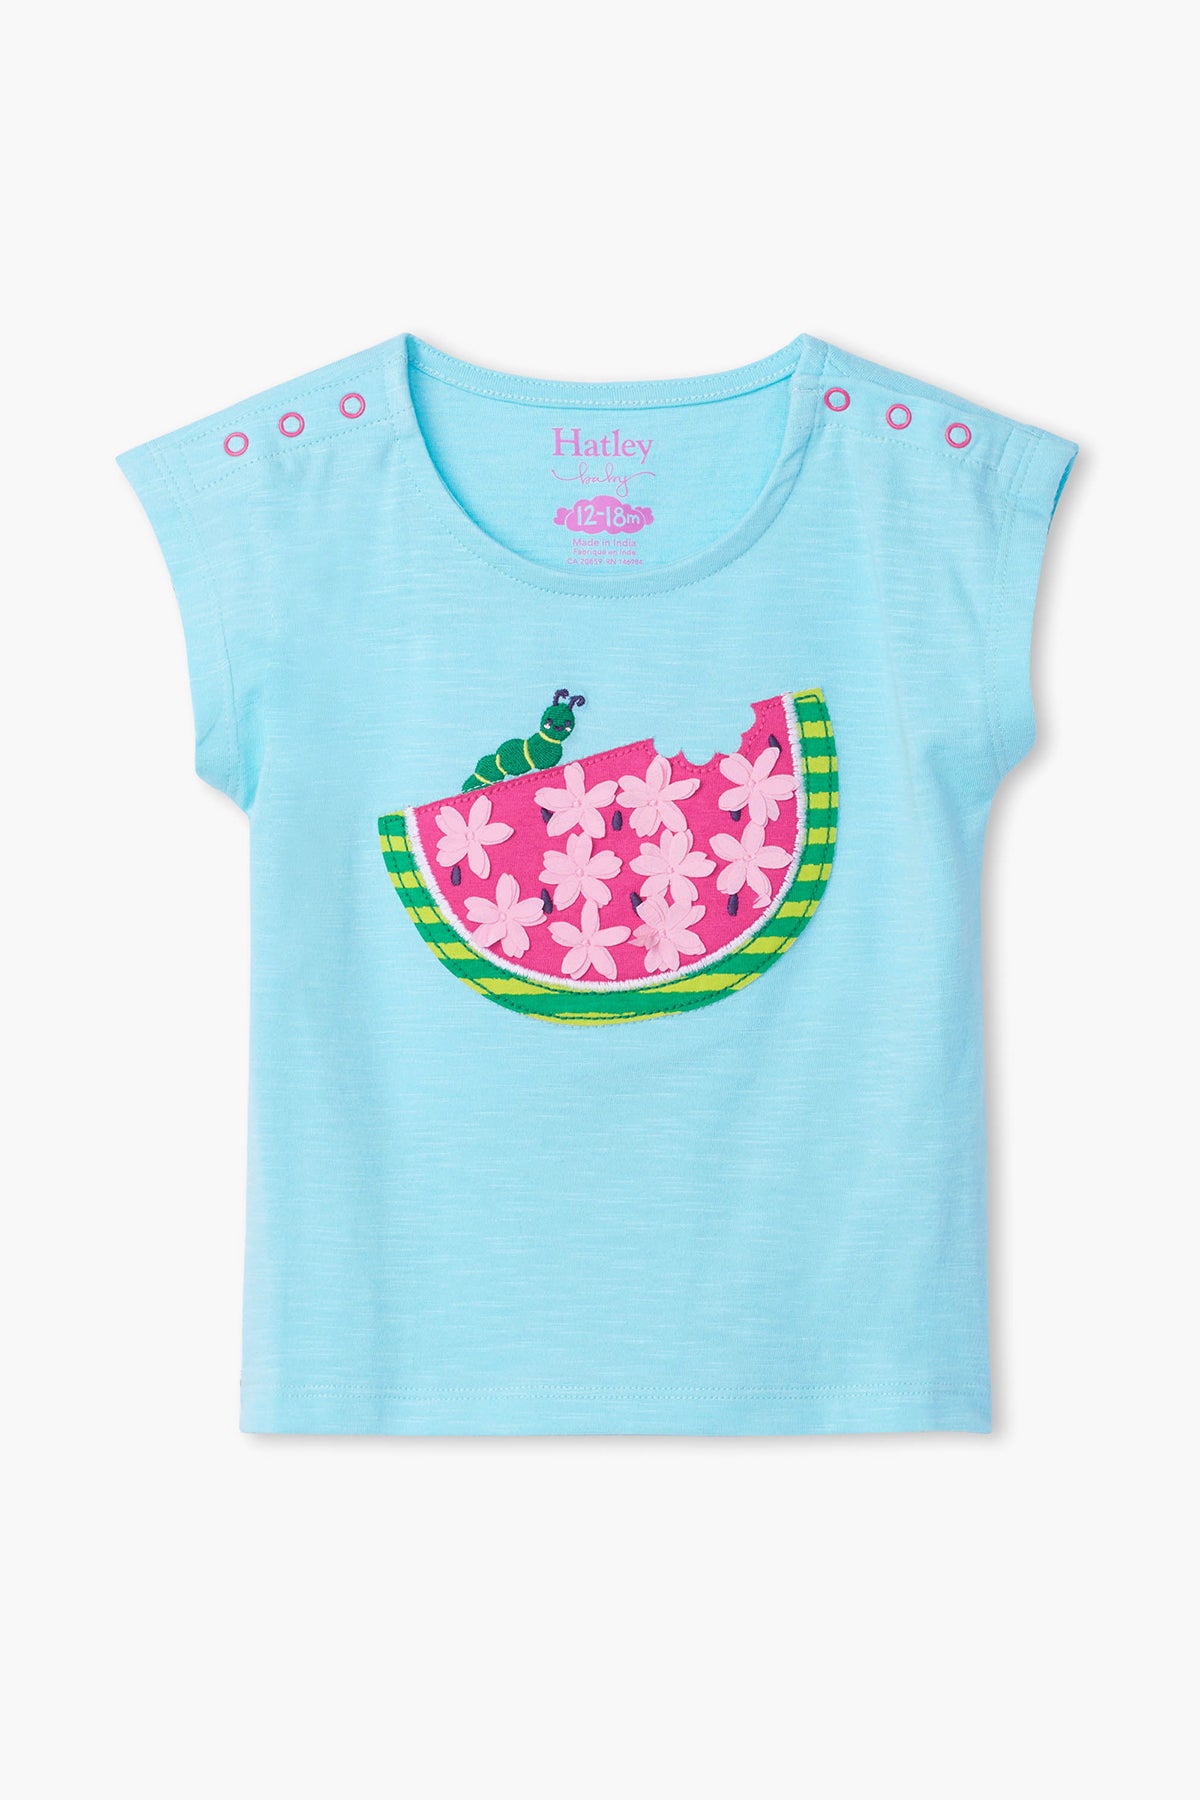 Hatley Watermelon Slice Baby Girls Shirt – Mini Ruby